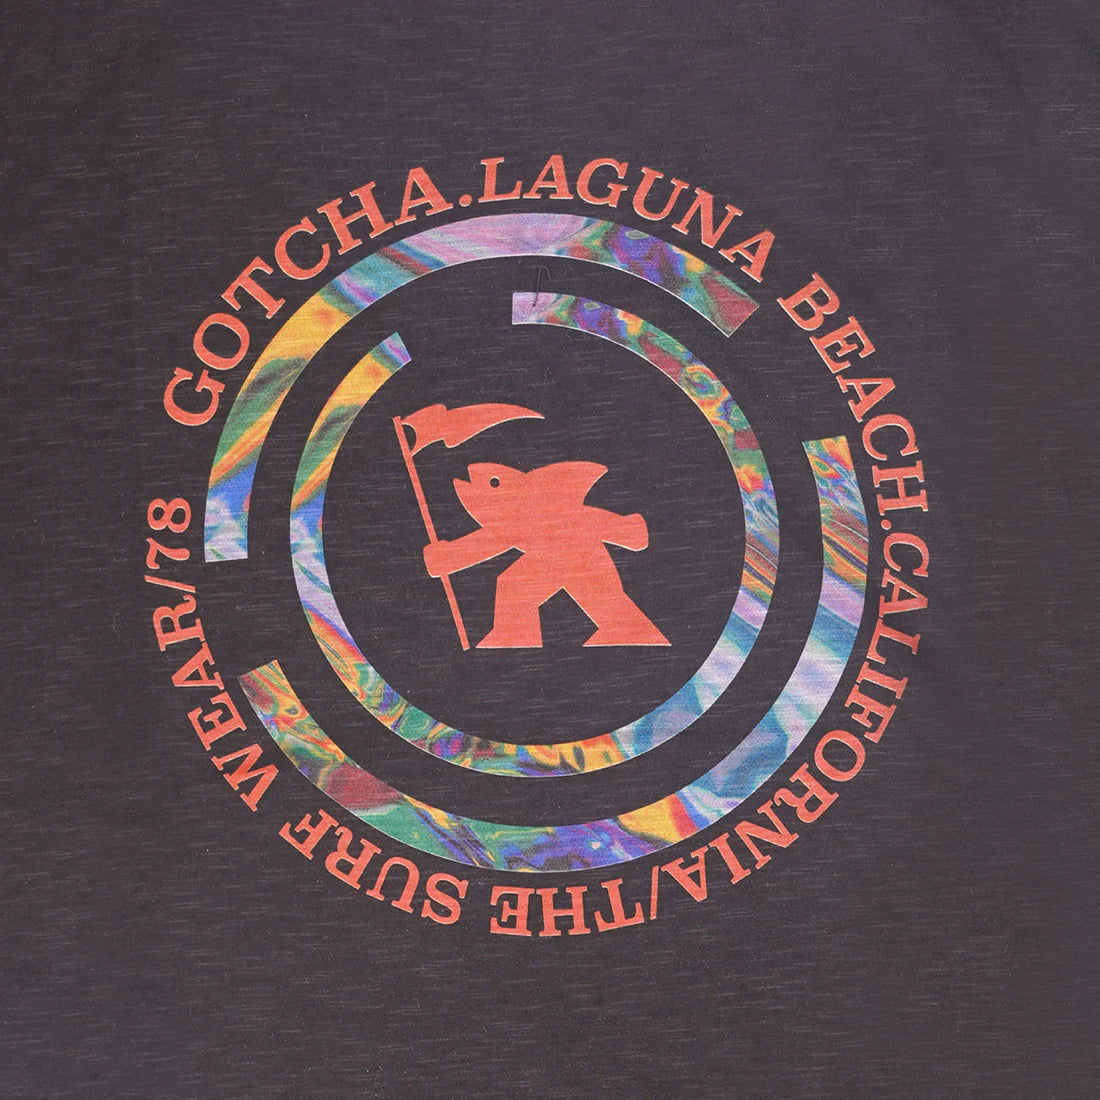 Gotcha logo on T-shirt